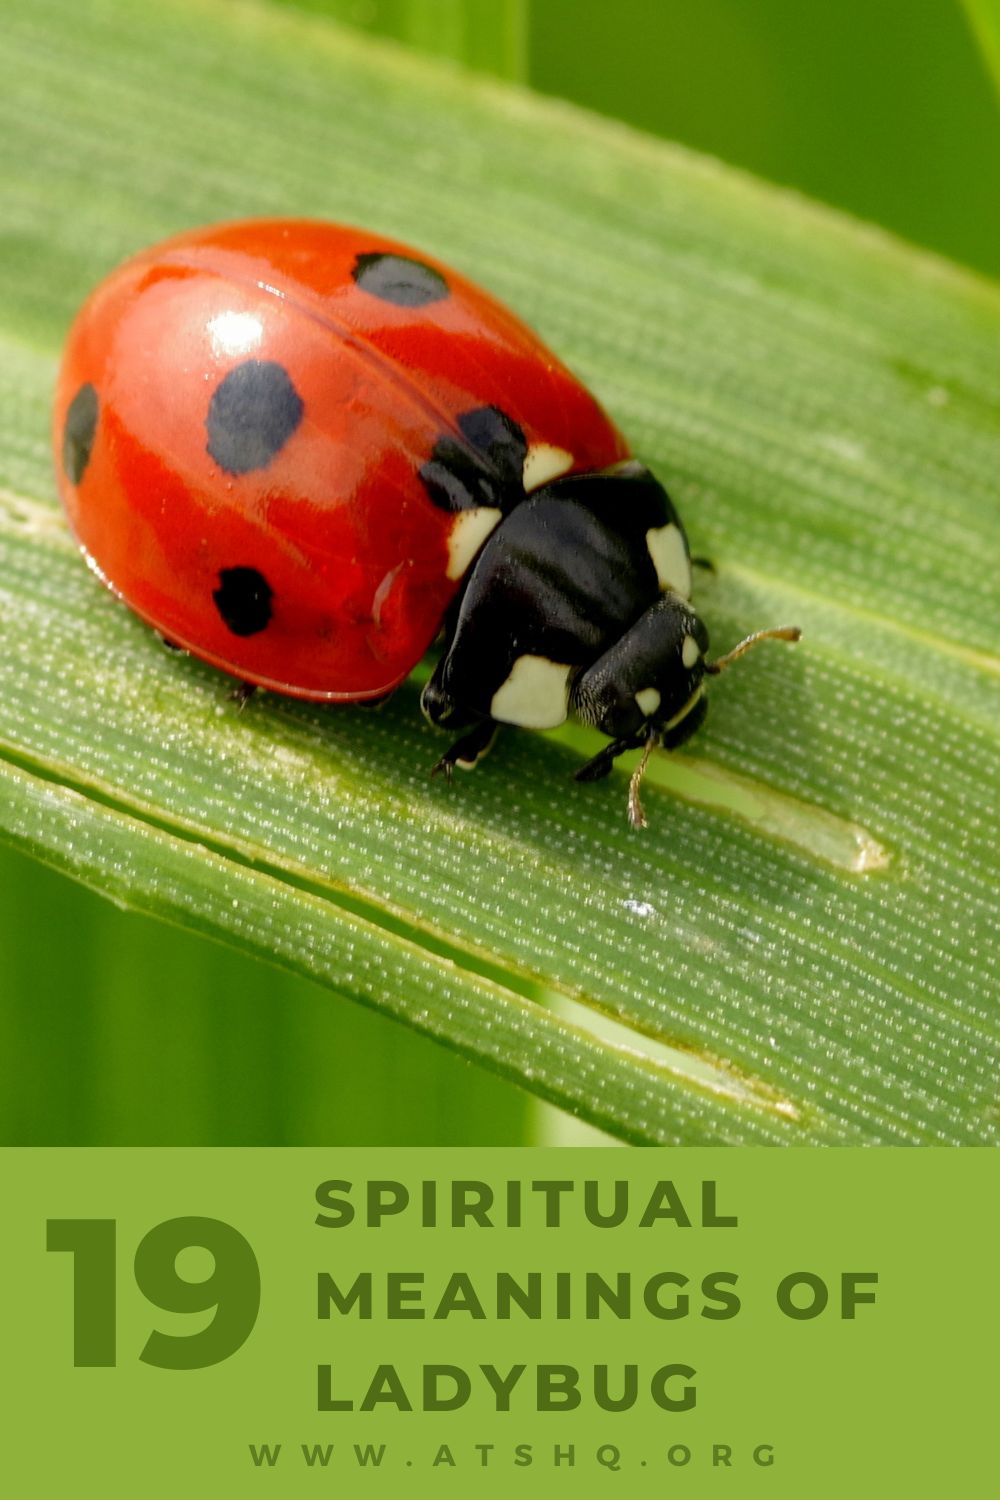 ladybug symbolism